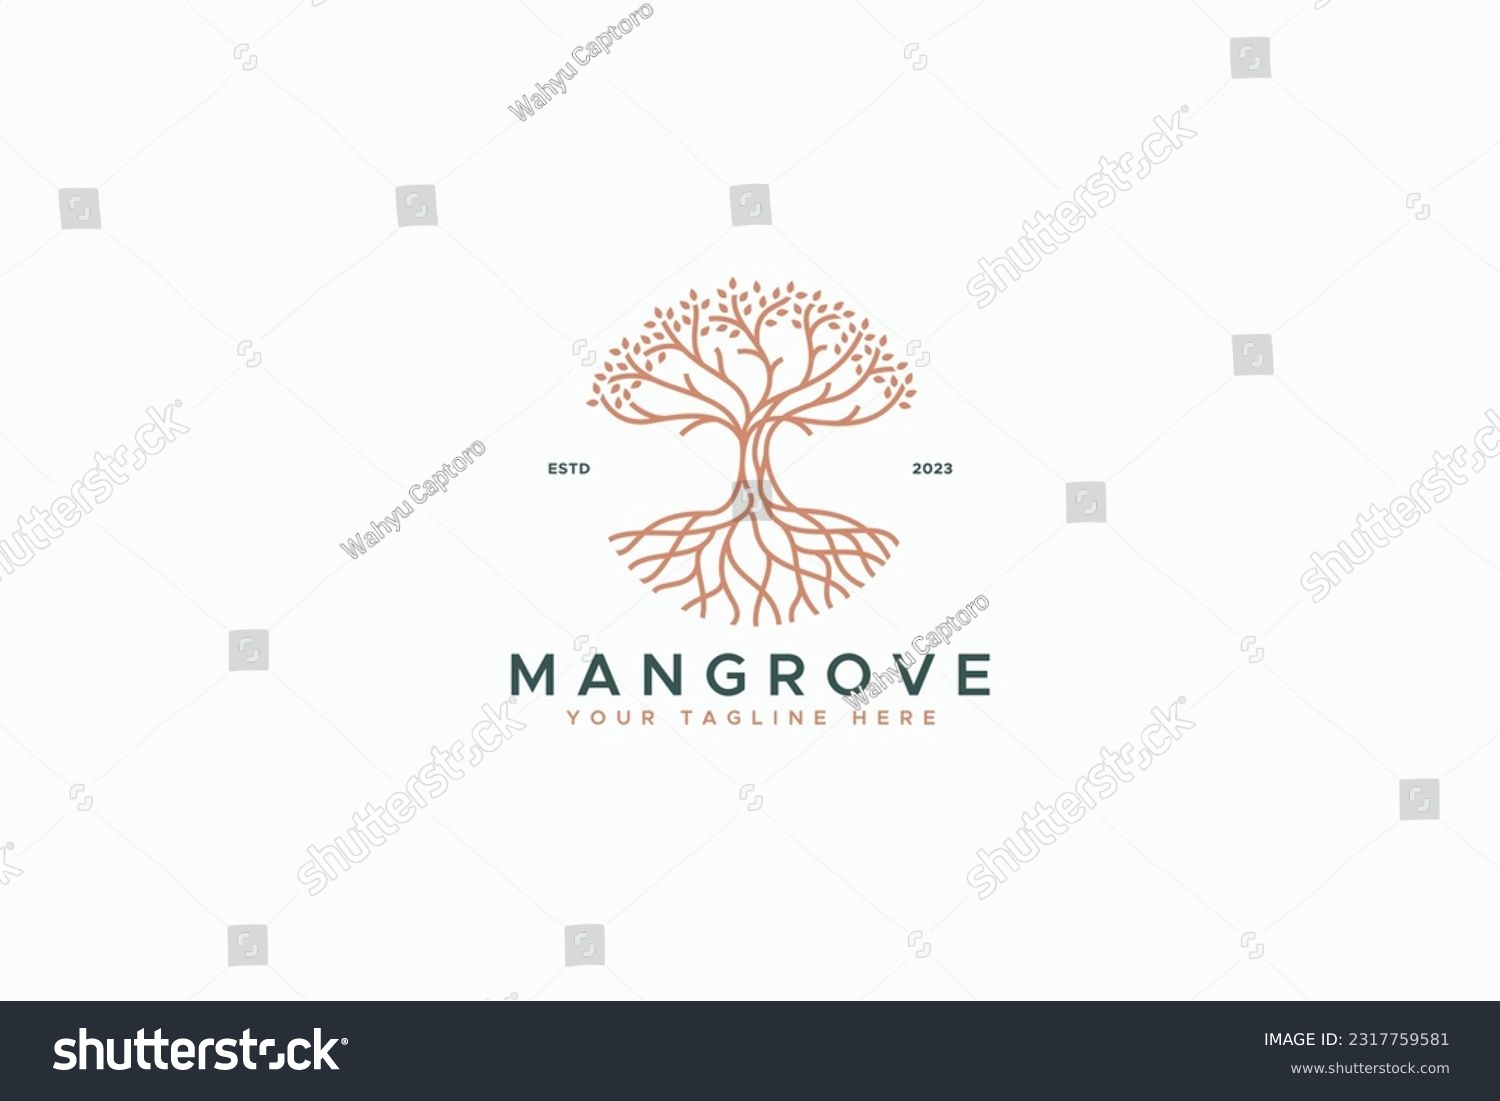 SVG of Mangrove Tree Vegetation Premium and Luxury Brand Identity Logo svg